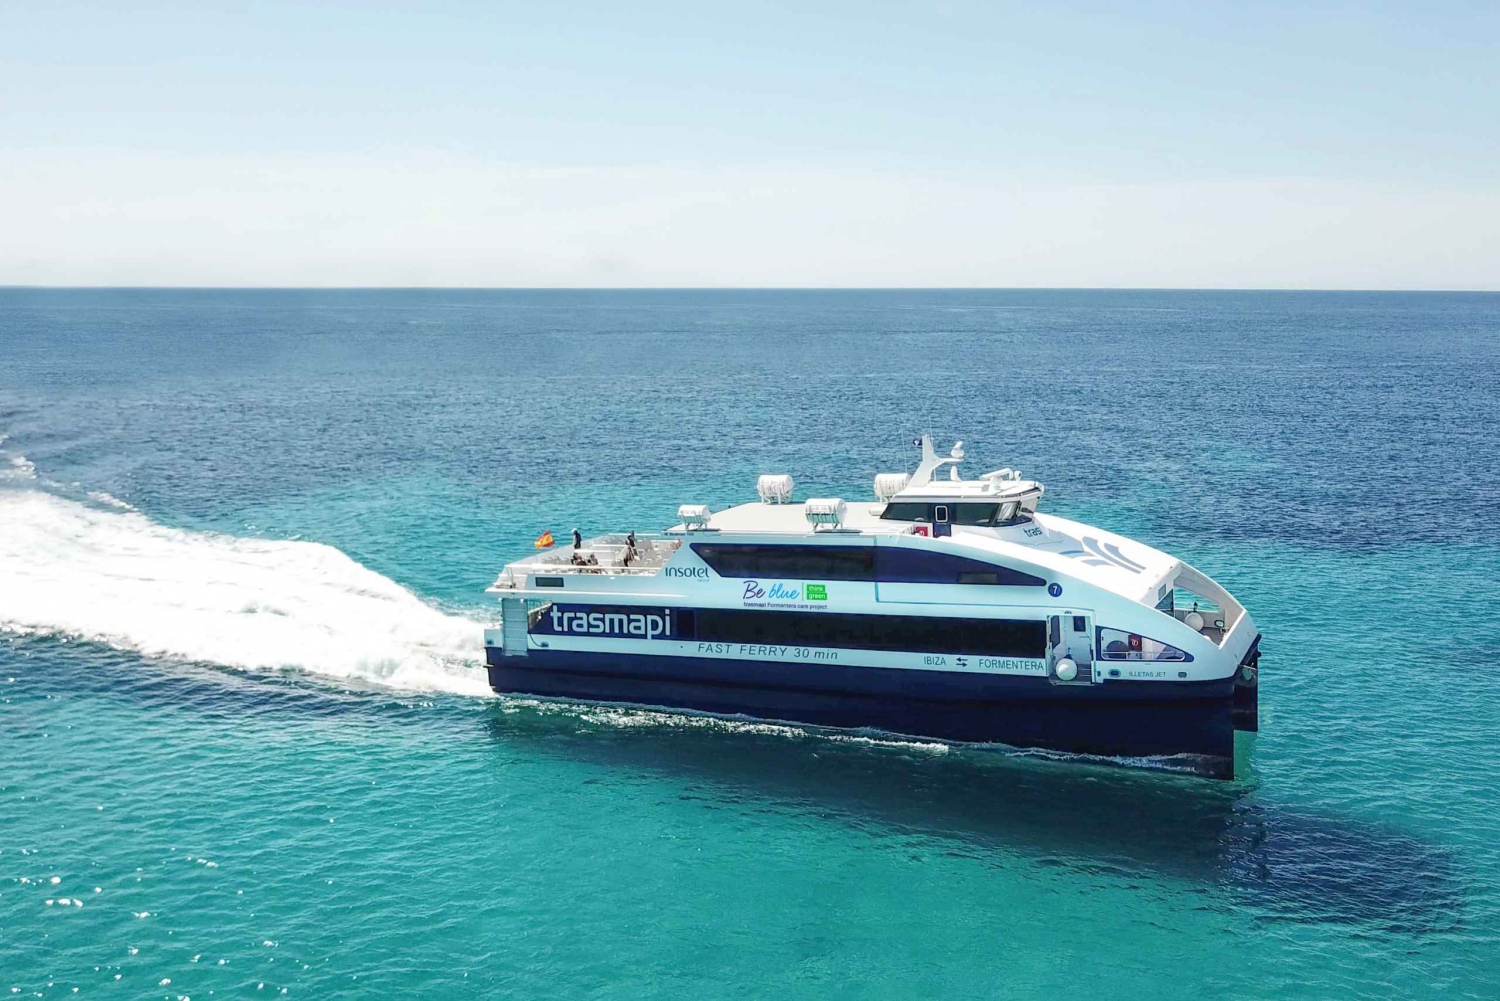 From Ibiza: Return Ferry Ticket to Formentera